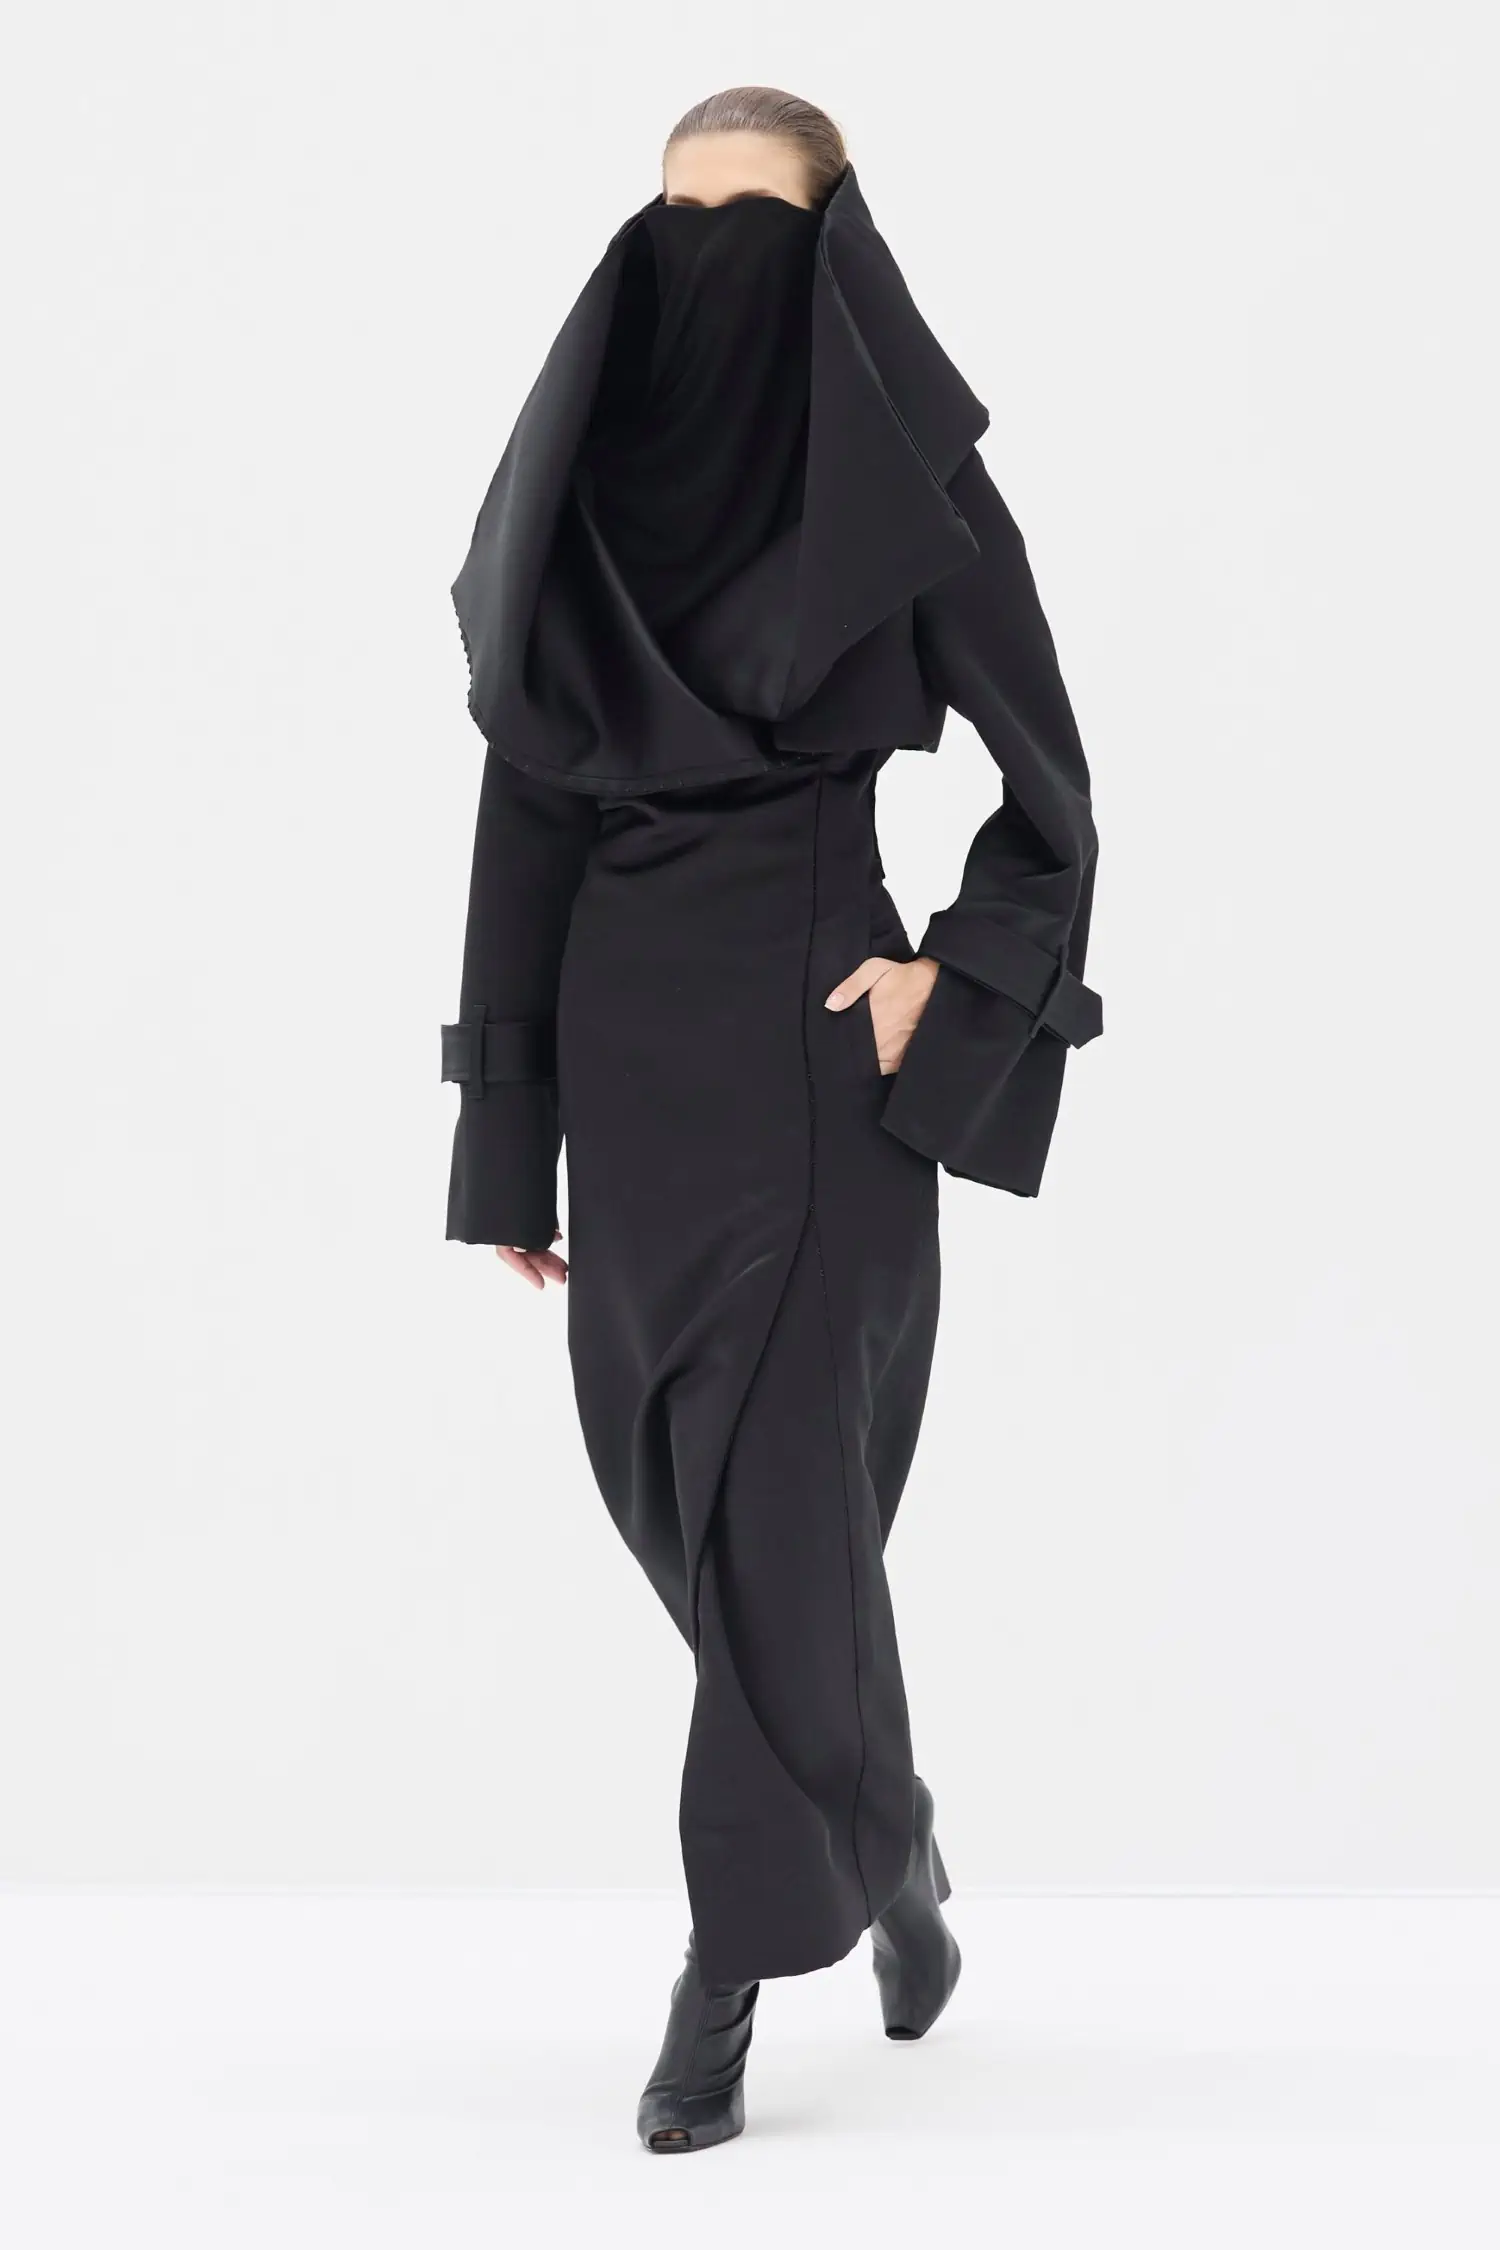 Jean Paul Gaultier Haute Couture Fall-Winter 2024